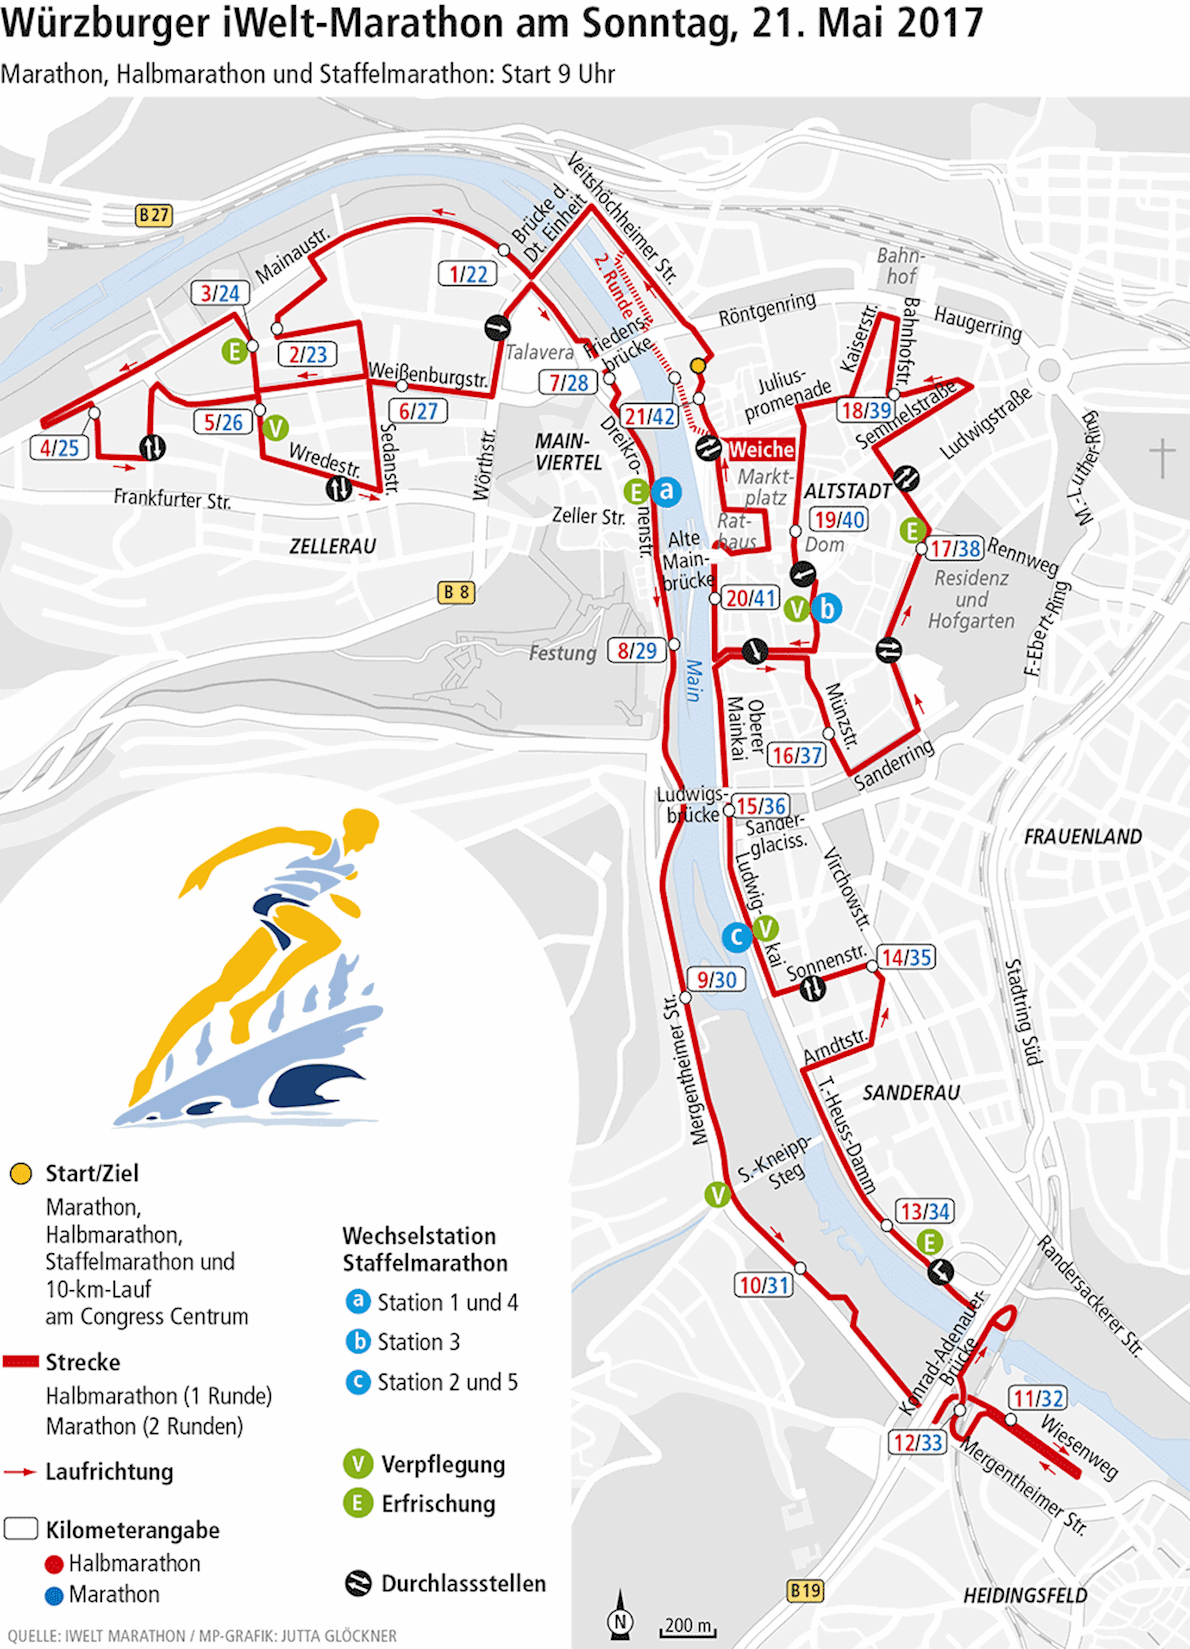 iWelt Marathon Würzburg Routenkarte